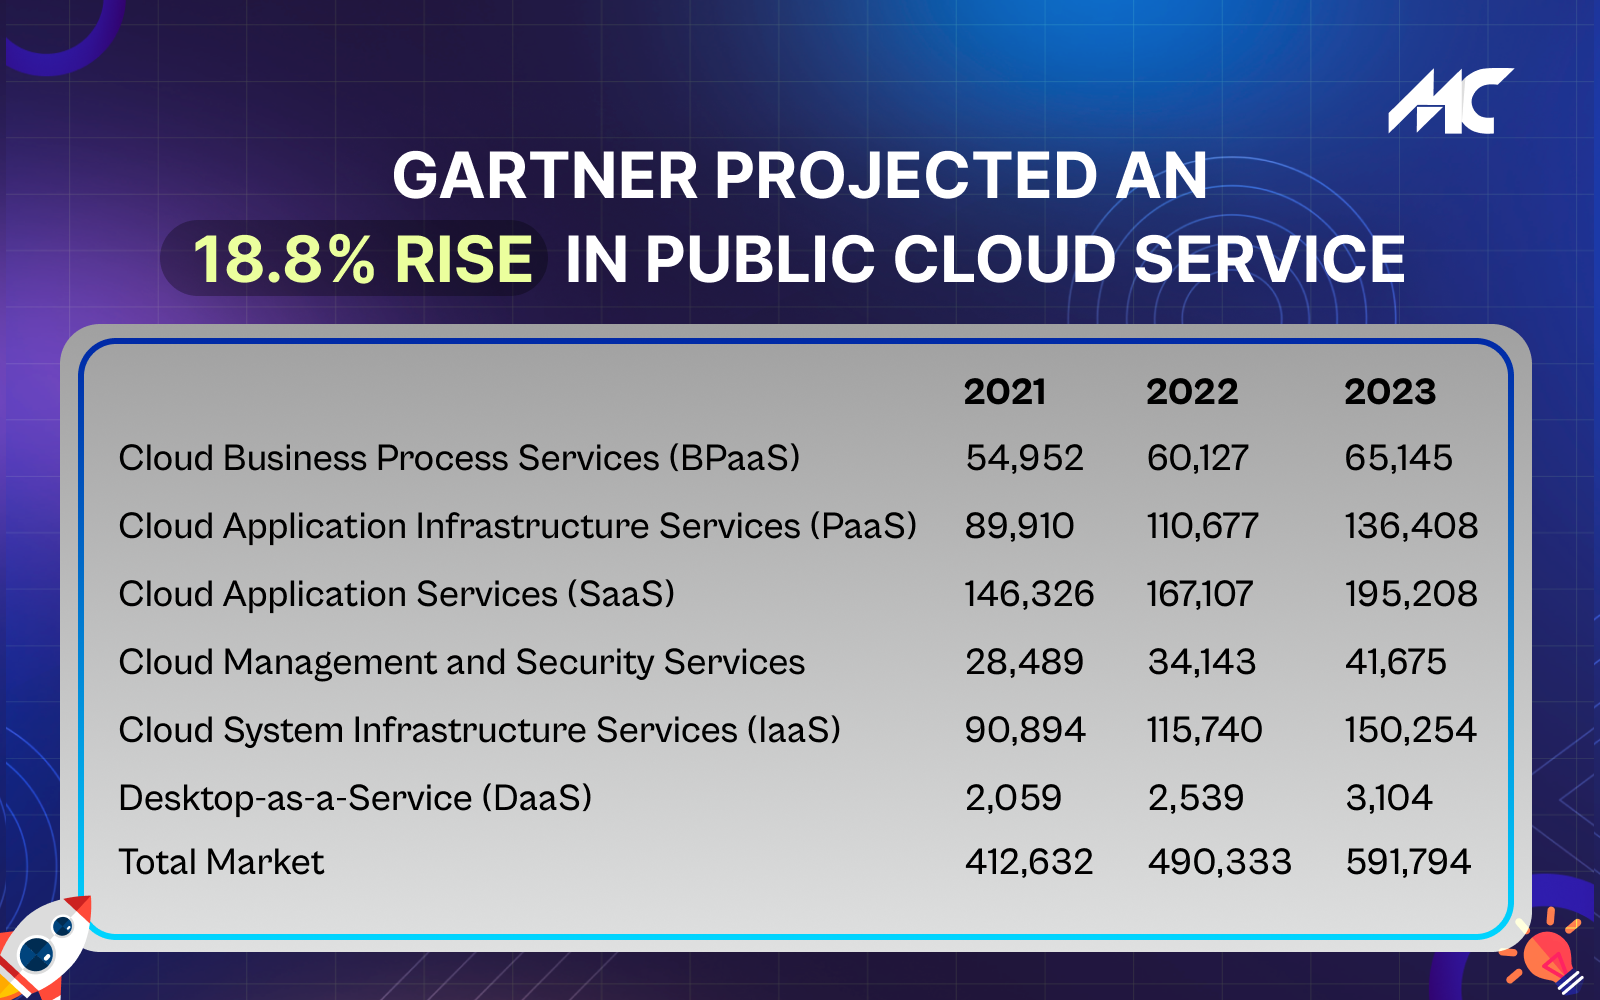 <img src="Gartner Projected an 18.8% rise in public cloud service.png" alt="Gartner Projected an 18.8% rise in public cloud service>